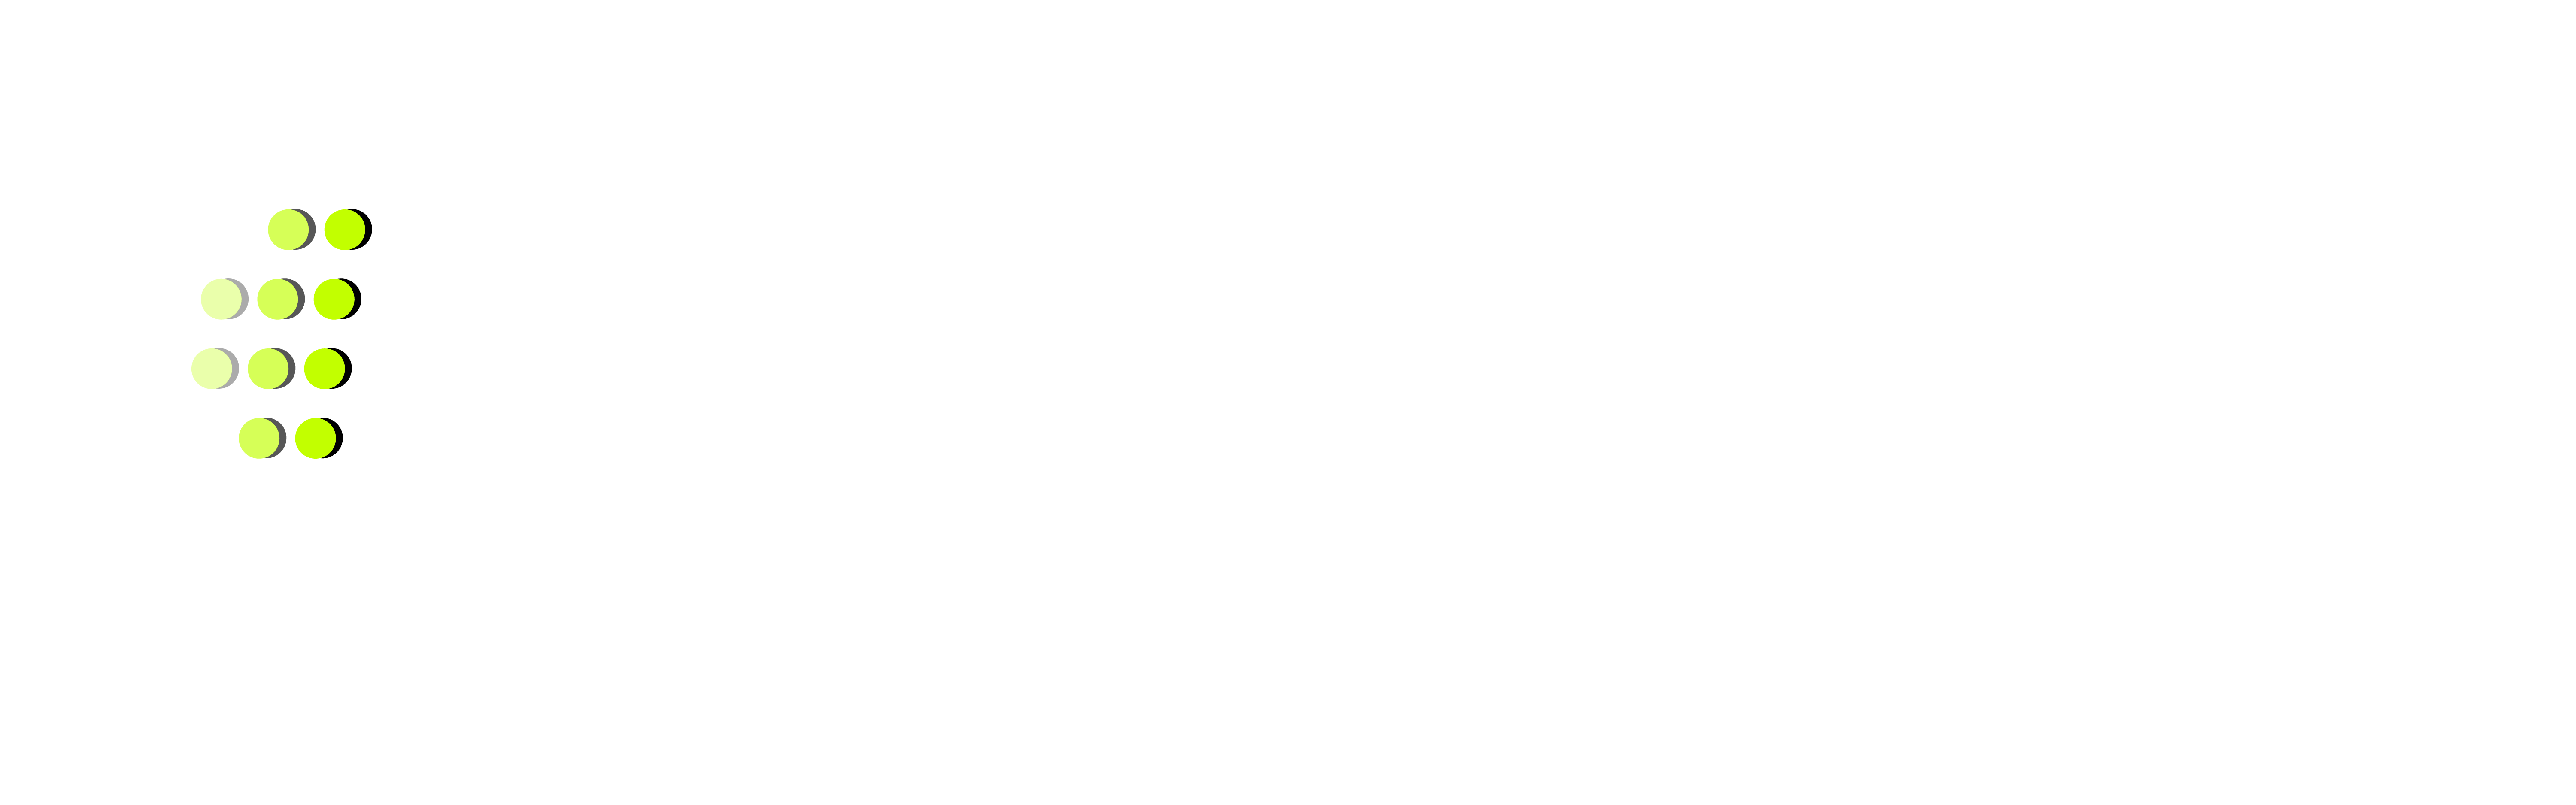 InterPadel Drammen Logo Web